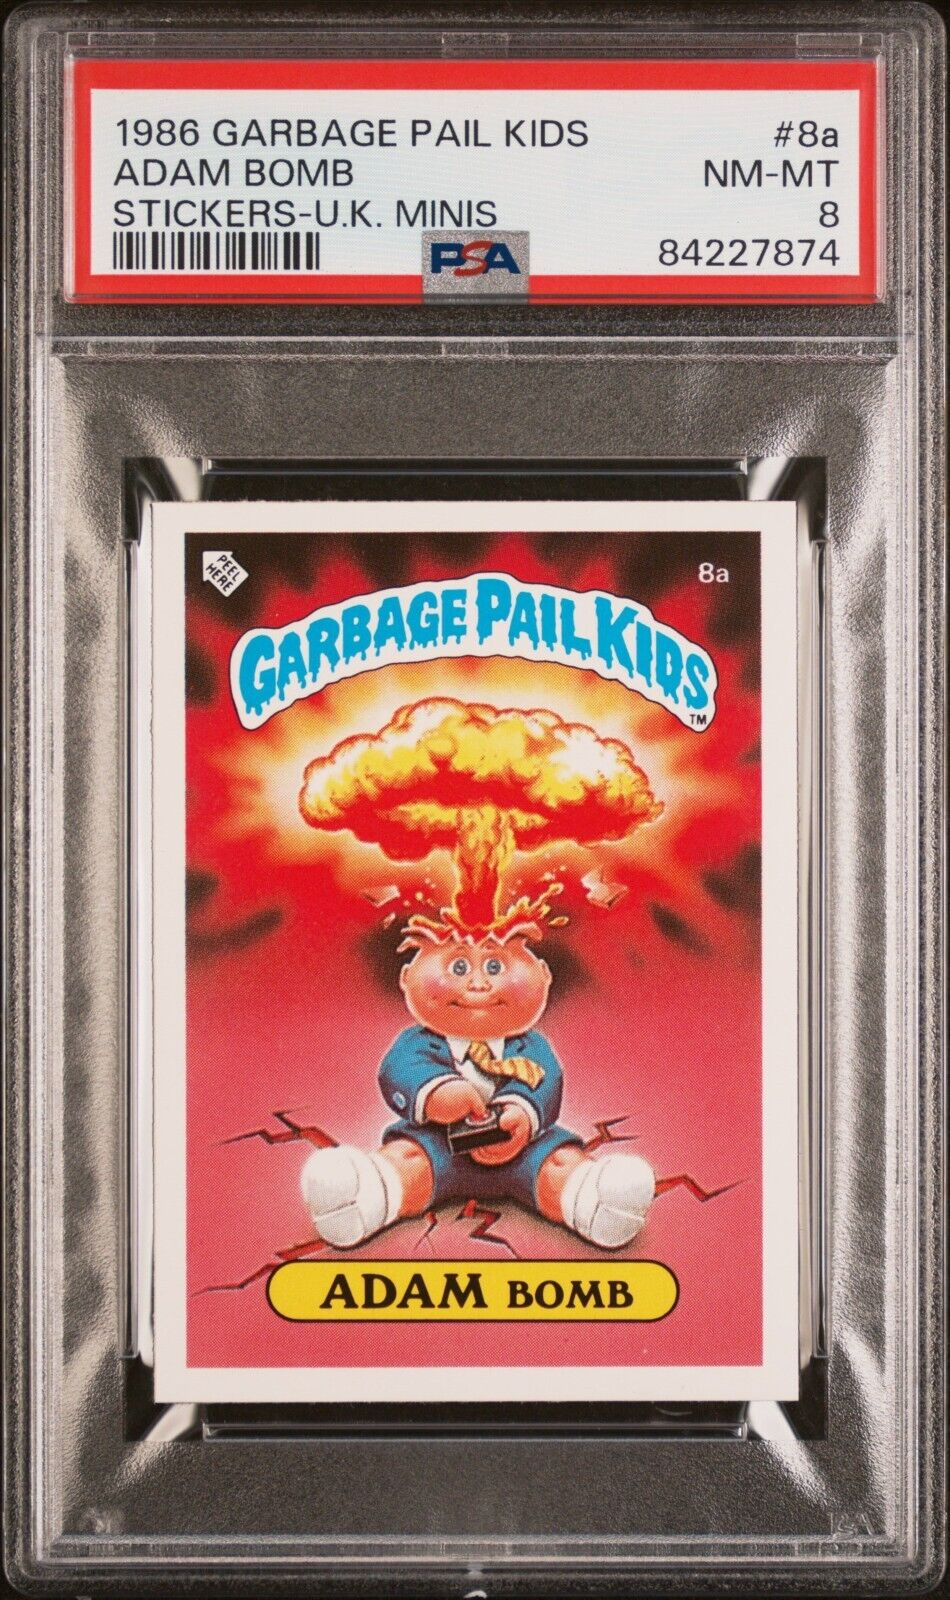 1986 Garbage Pail Kids OS1 Series 1 UK Mini ADAM BOMB 8a Card PSA 8 NM-MT